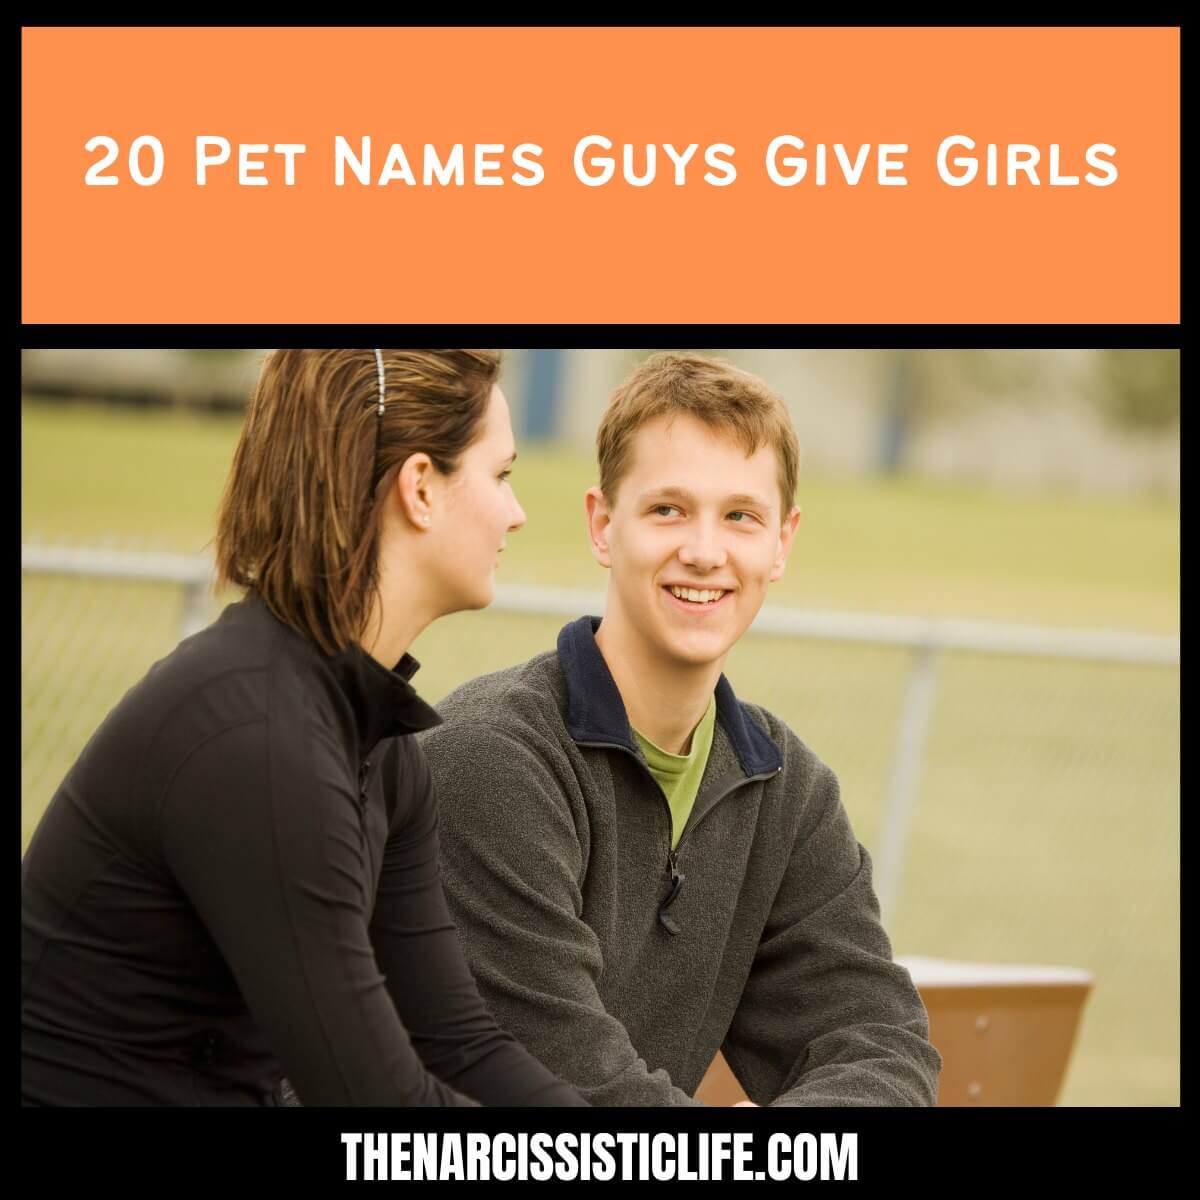 20 Pet Names Guys Give Girls